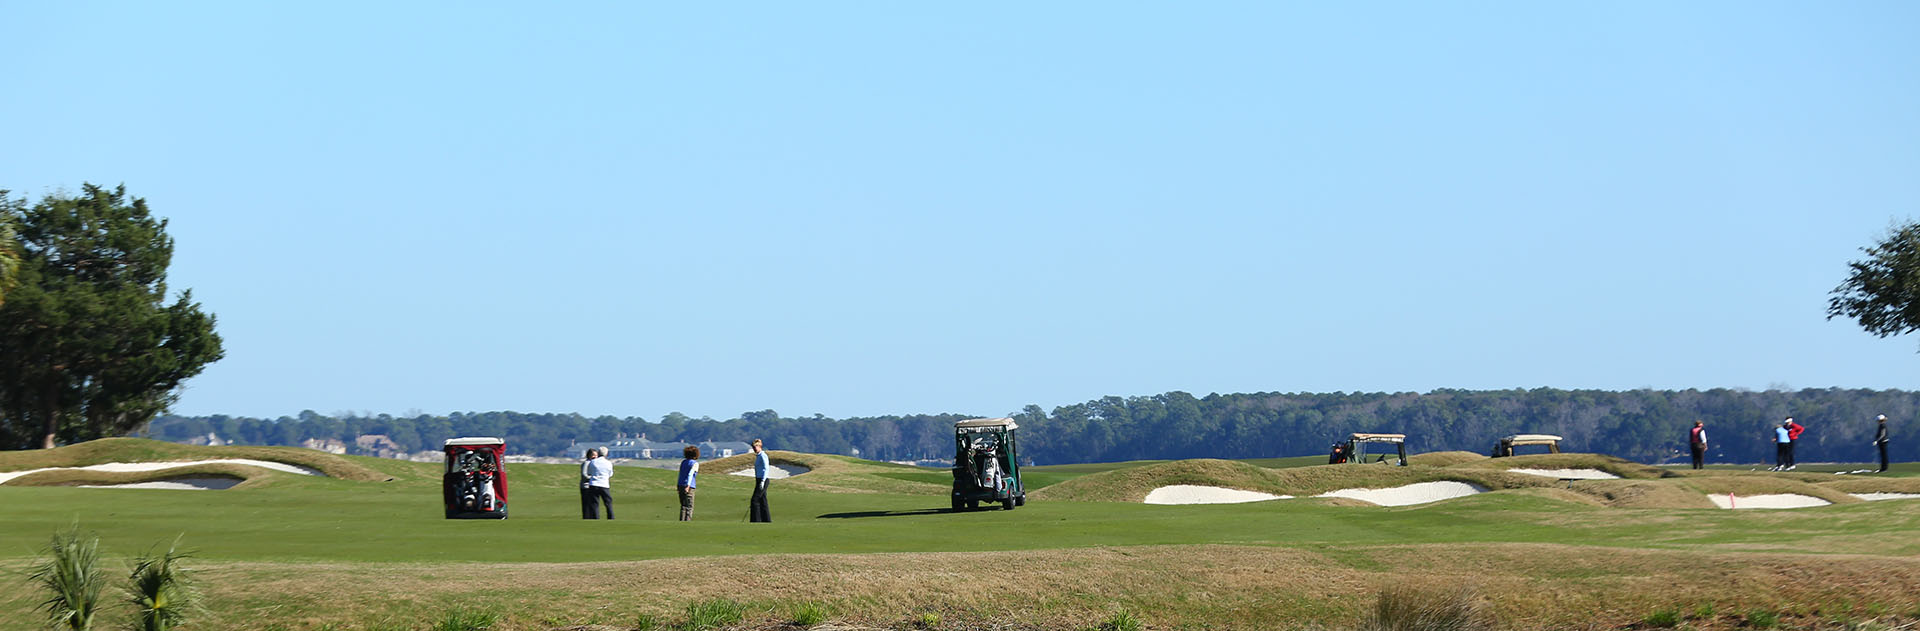 Belfair plantation golf course